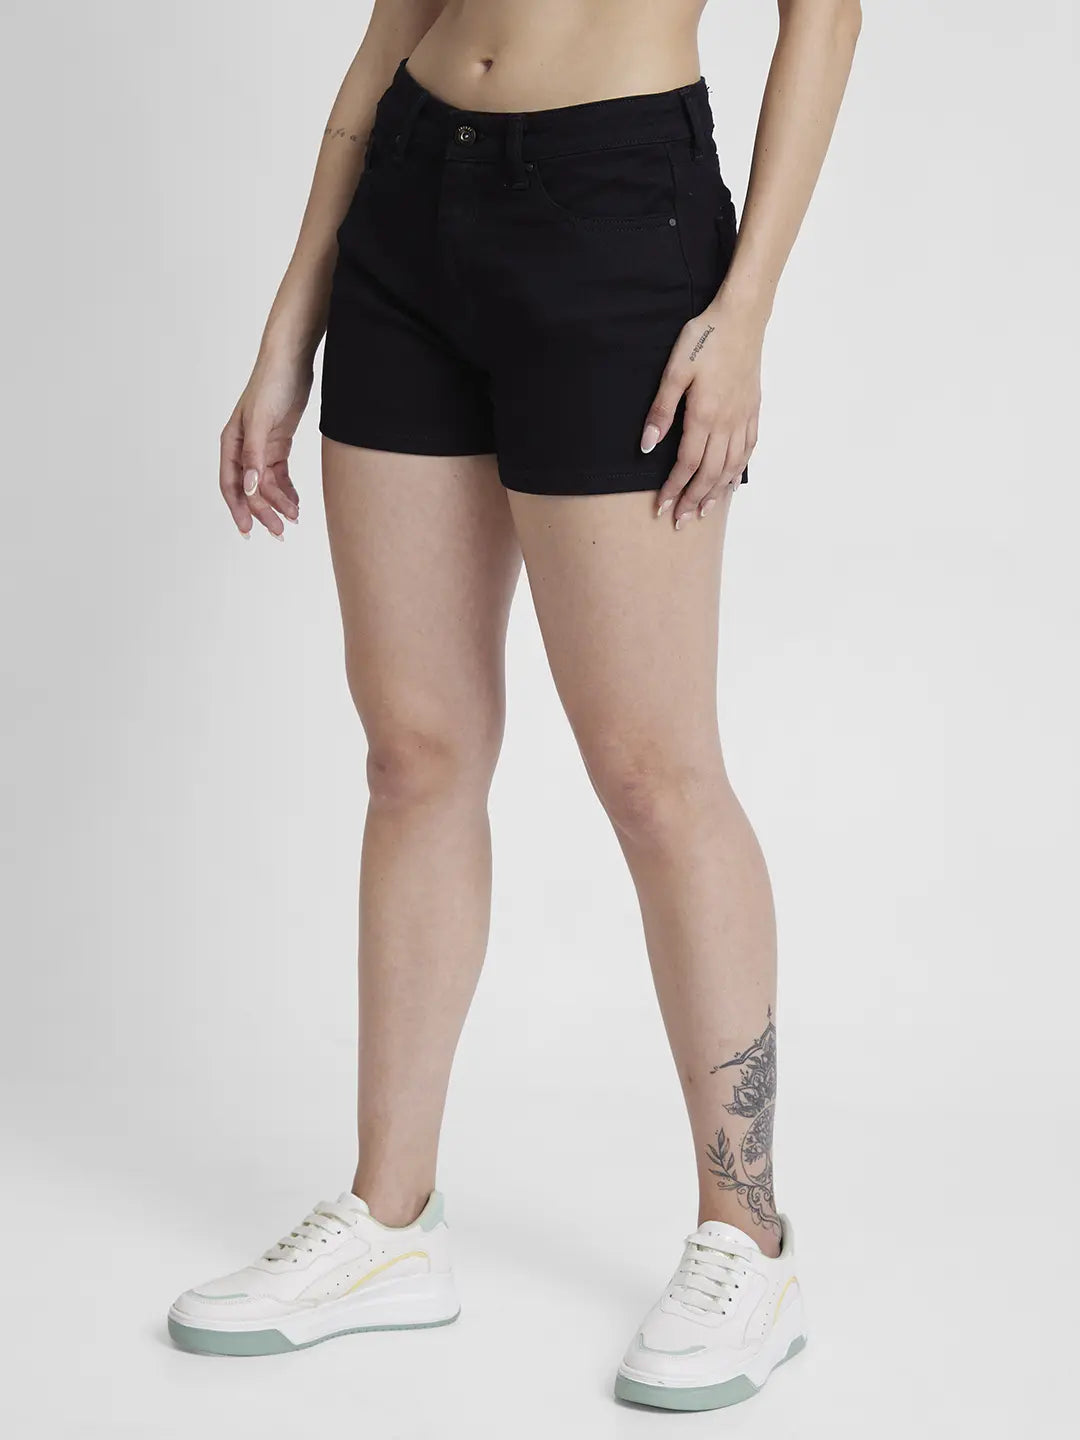 Loalirando Women's Black Jean Shorts High Waist Stretch Denim Short Pants  Clubwear Summer Clothes - Walmart.com